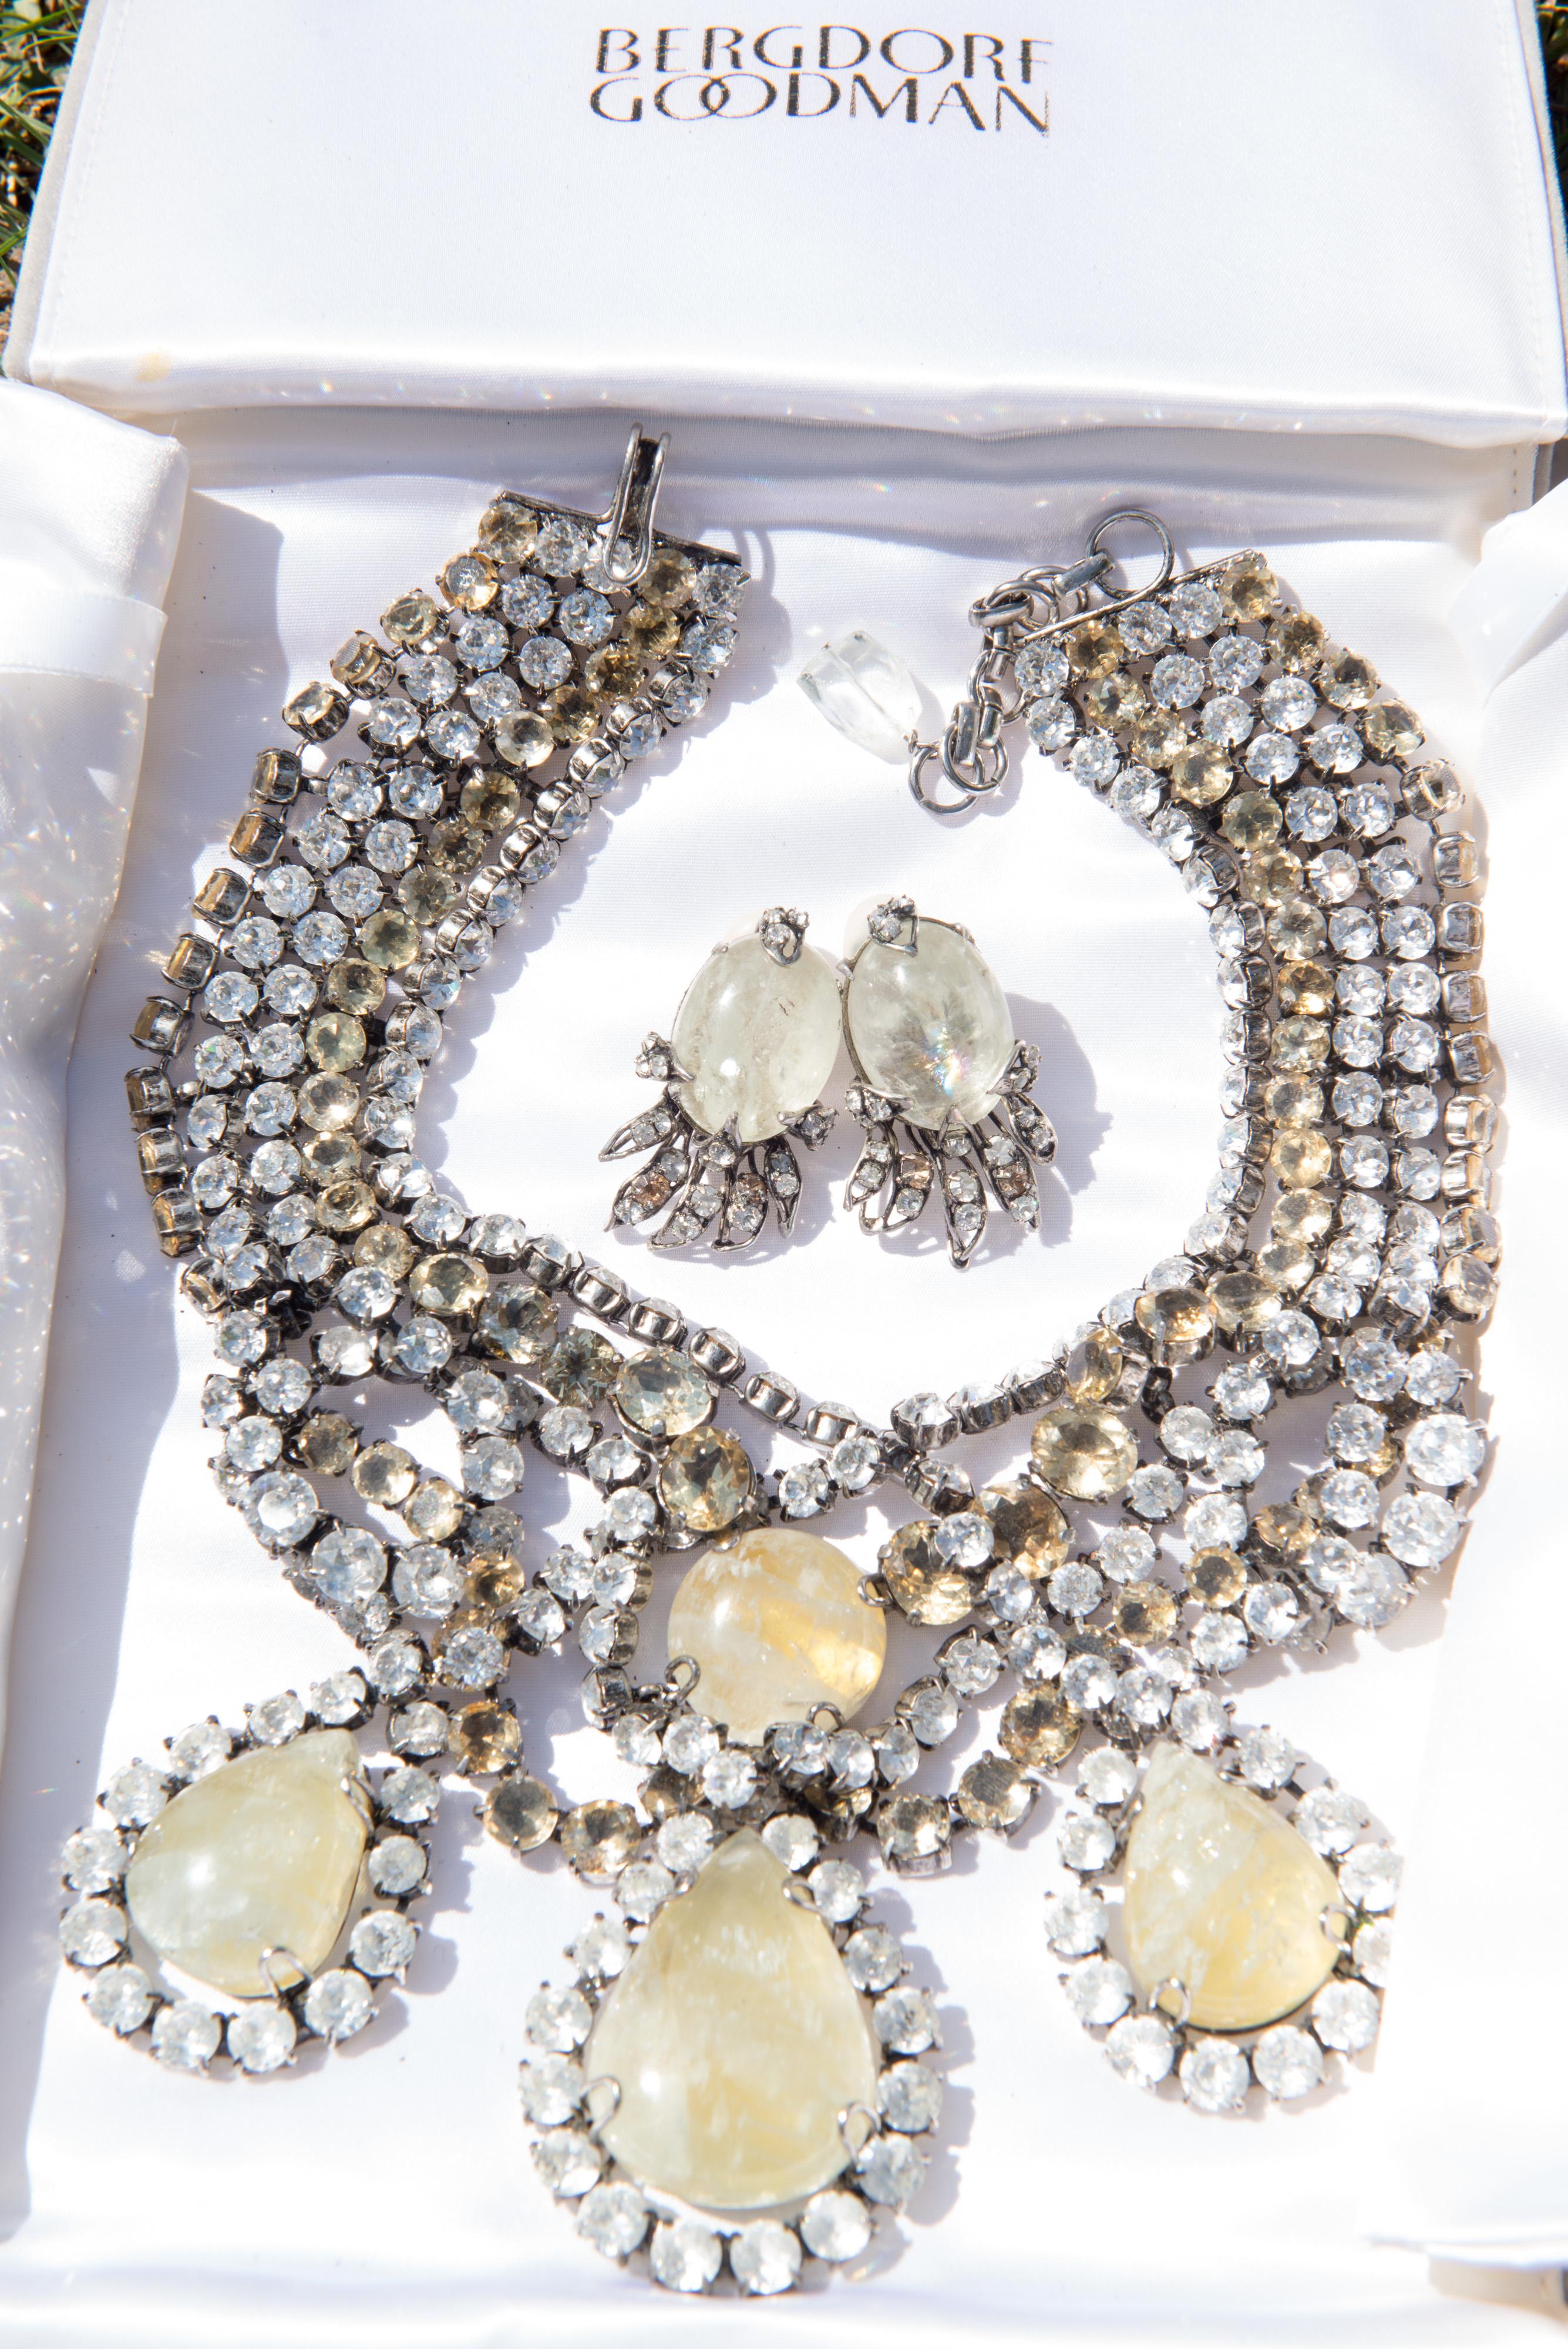 Iradj Moini six large pale yellow gemstones, Swarovsky rhinestones, topaz stones necklace and earrings. In original Bergdorf Goodman box. Earrings dimensions: 1.88